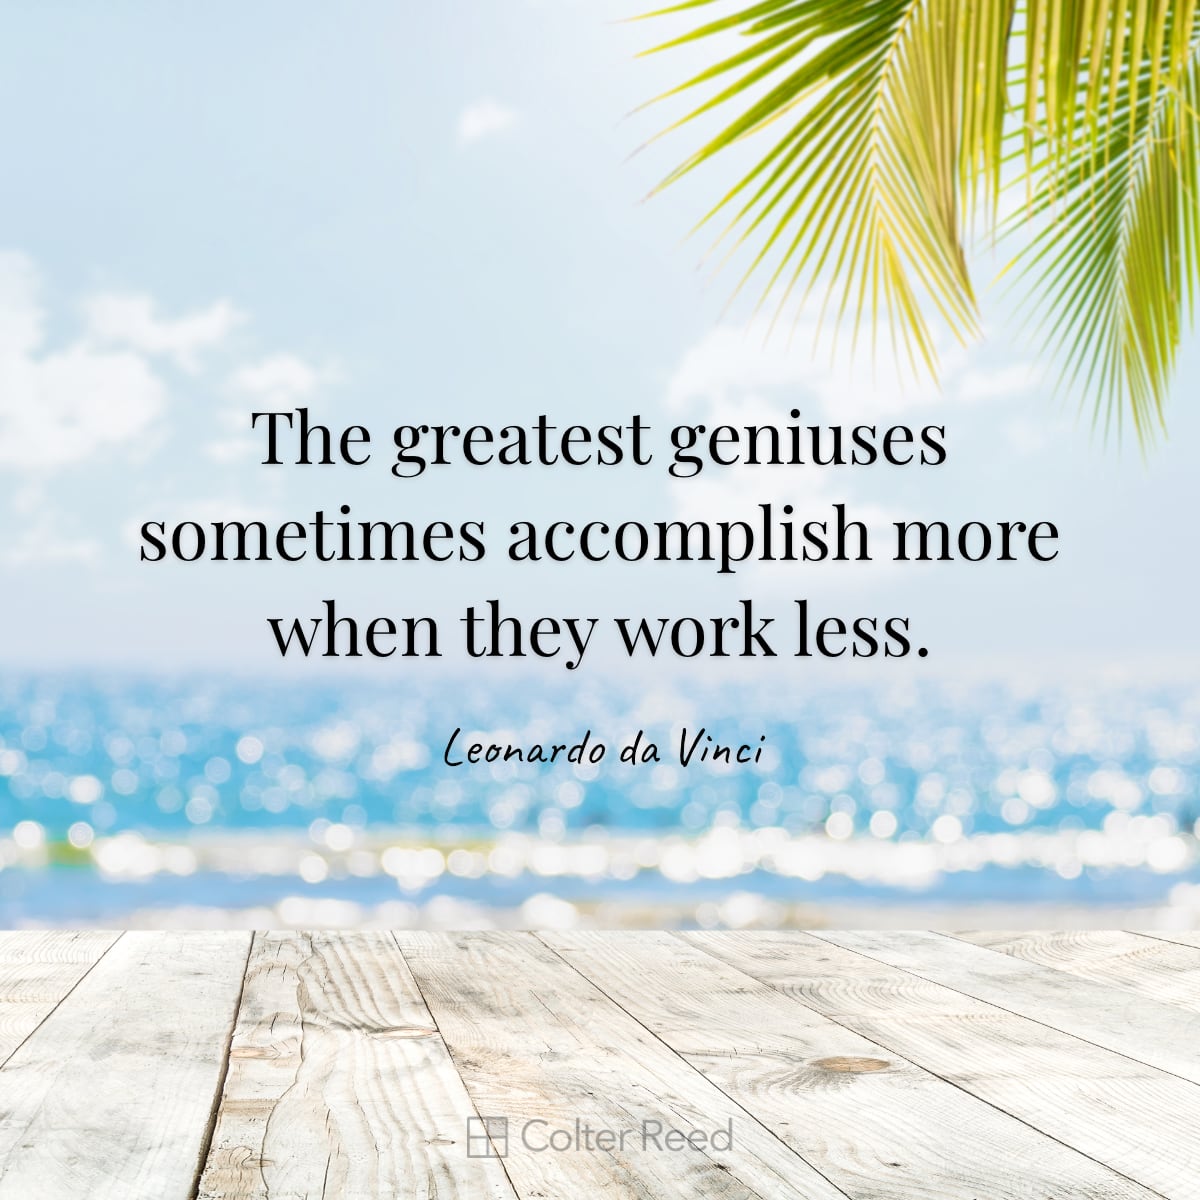 The greatest geniuses sometimes accomplish more when they work less. —Leonardo da Vinci